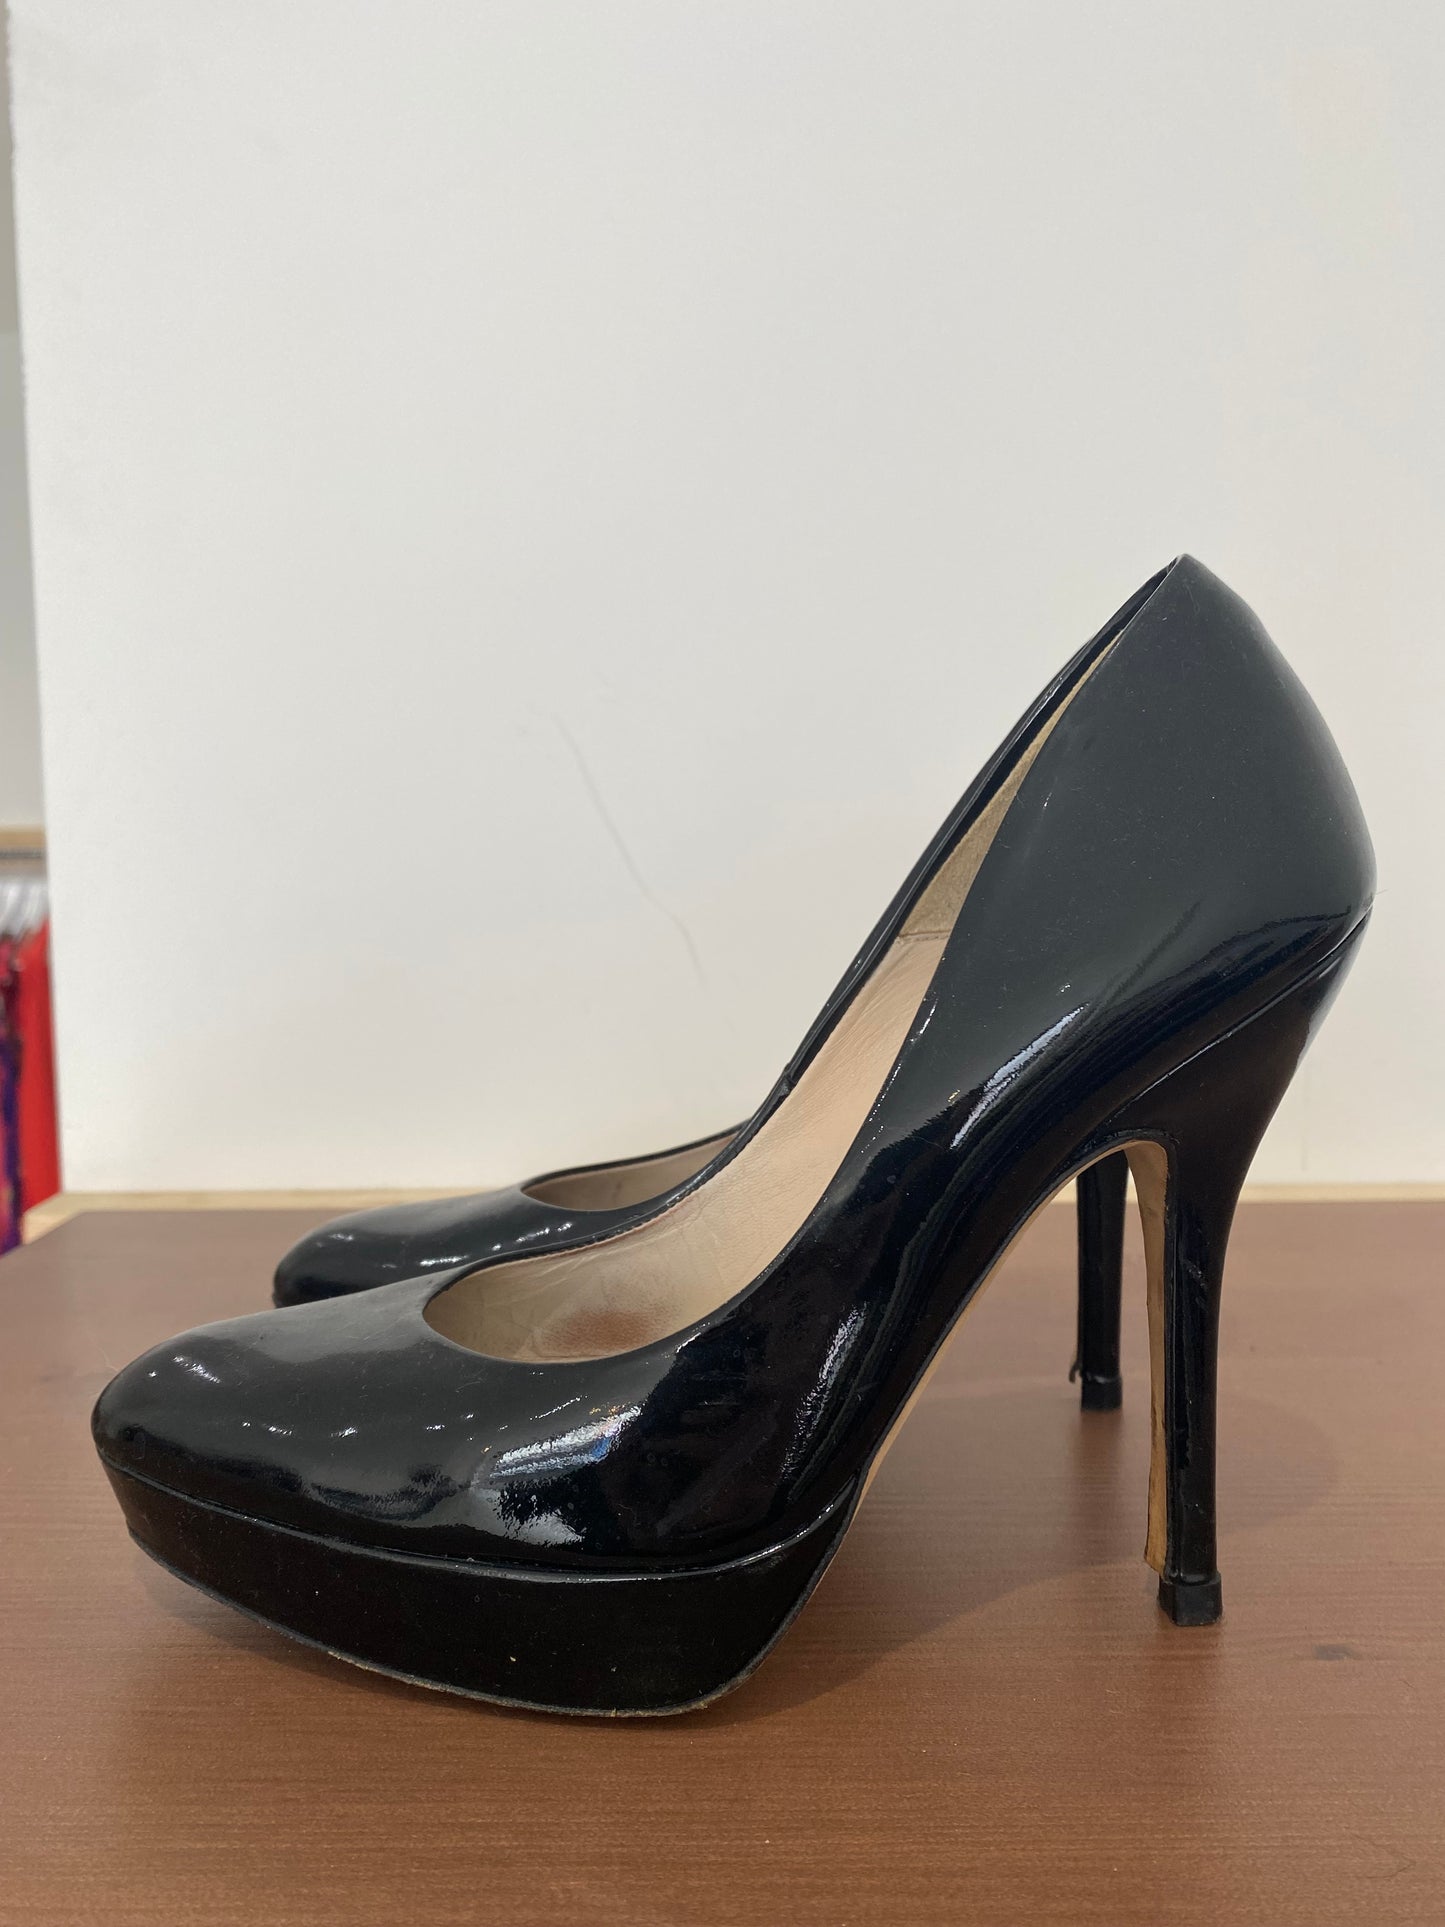 LK Bennett Black Patent Leather Heels Size 4.5